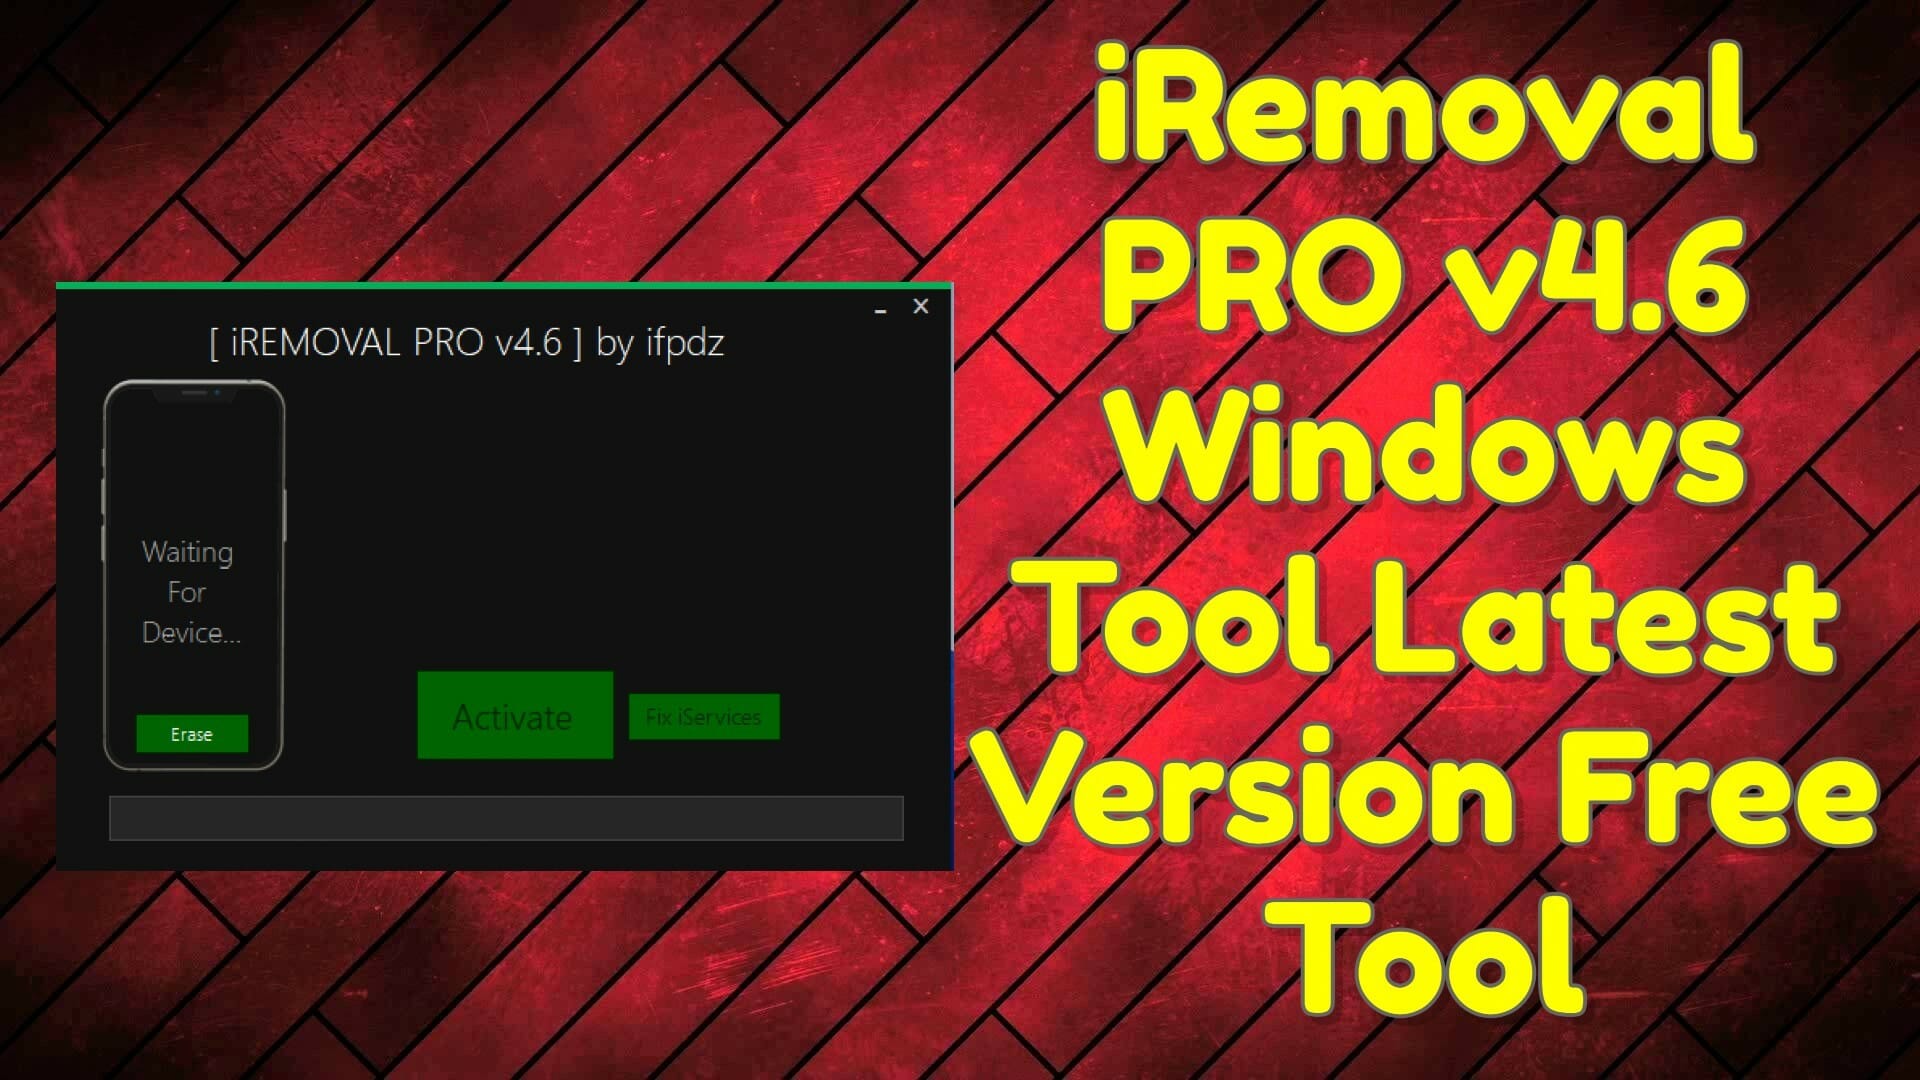 iRemoval PRO v4.6 Windows Tool Latest Version Free Tool